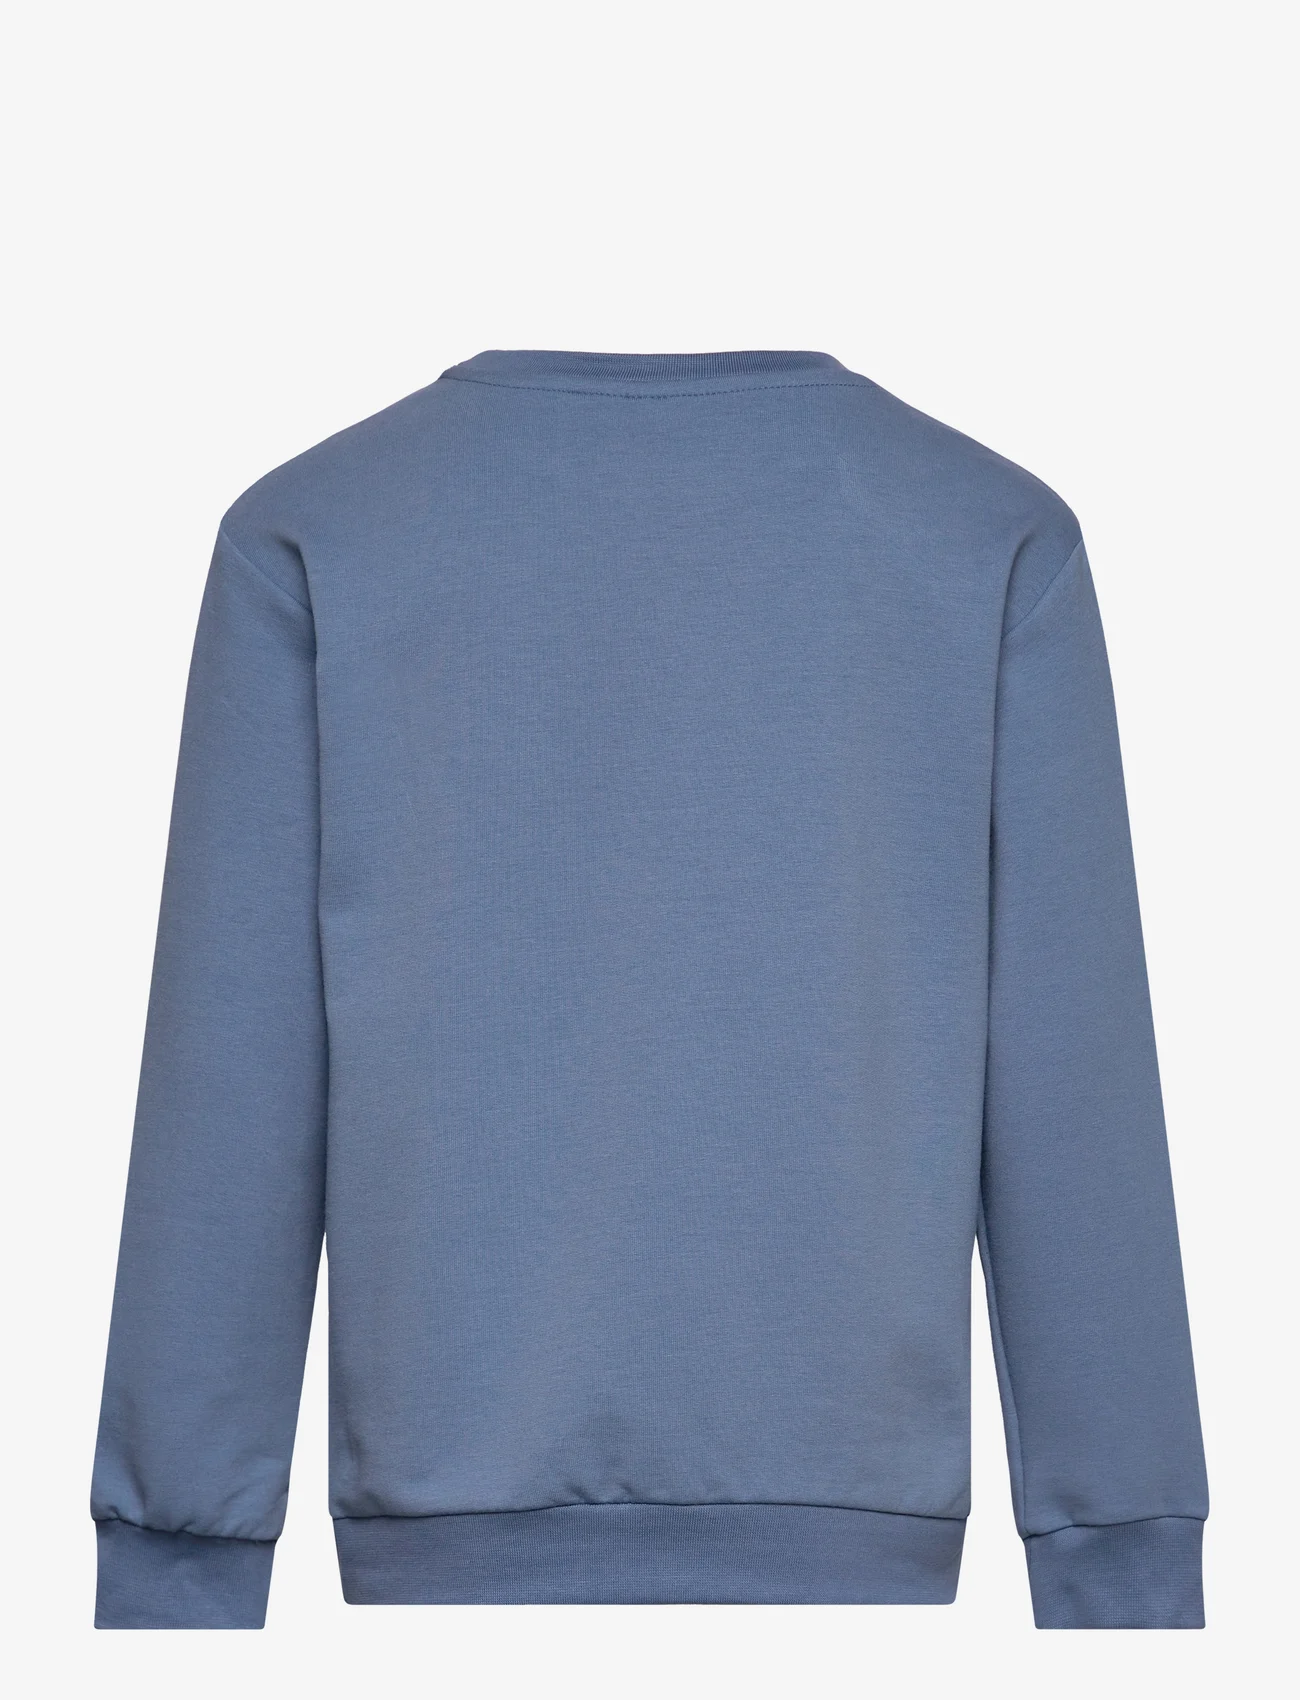 Hummel - hmlDOS SWEATSHIRT - sweatshirts & hættetrøjer - coronet blue - 1